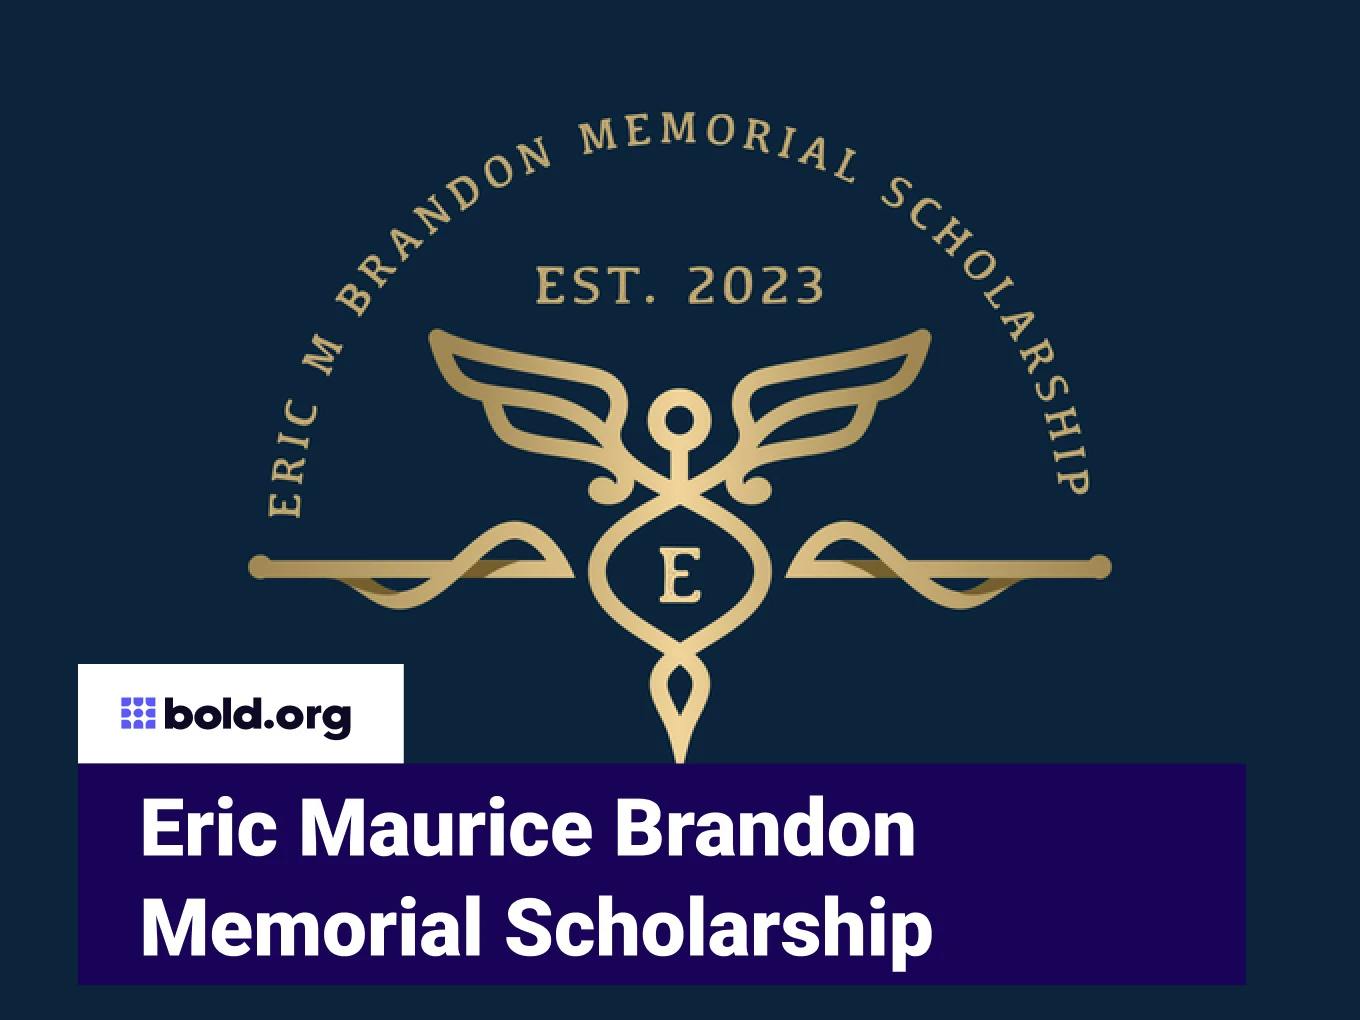 Eric Maurice Brandon Memorial Scholarship